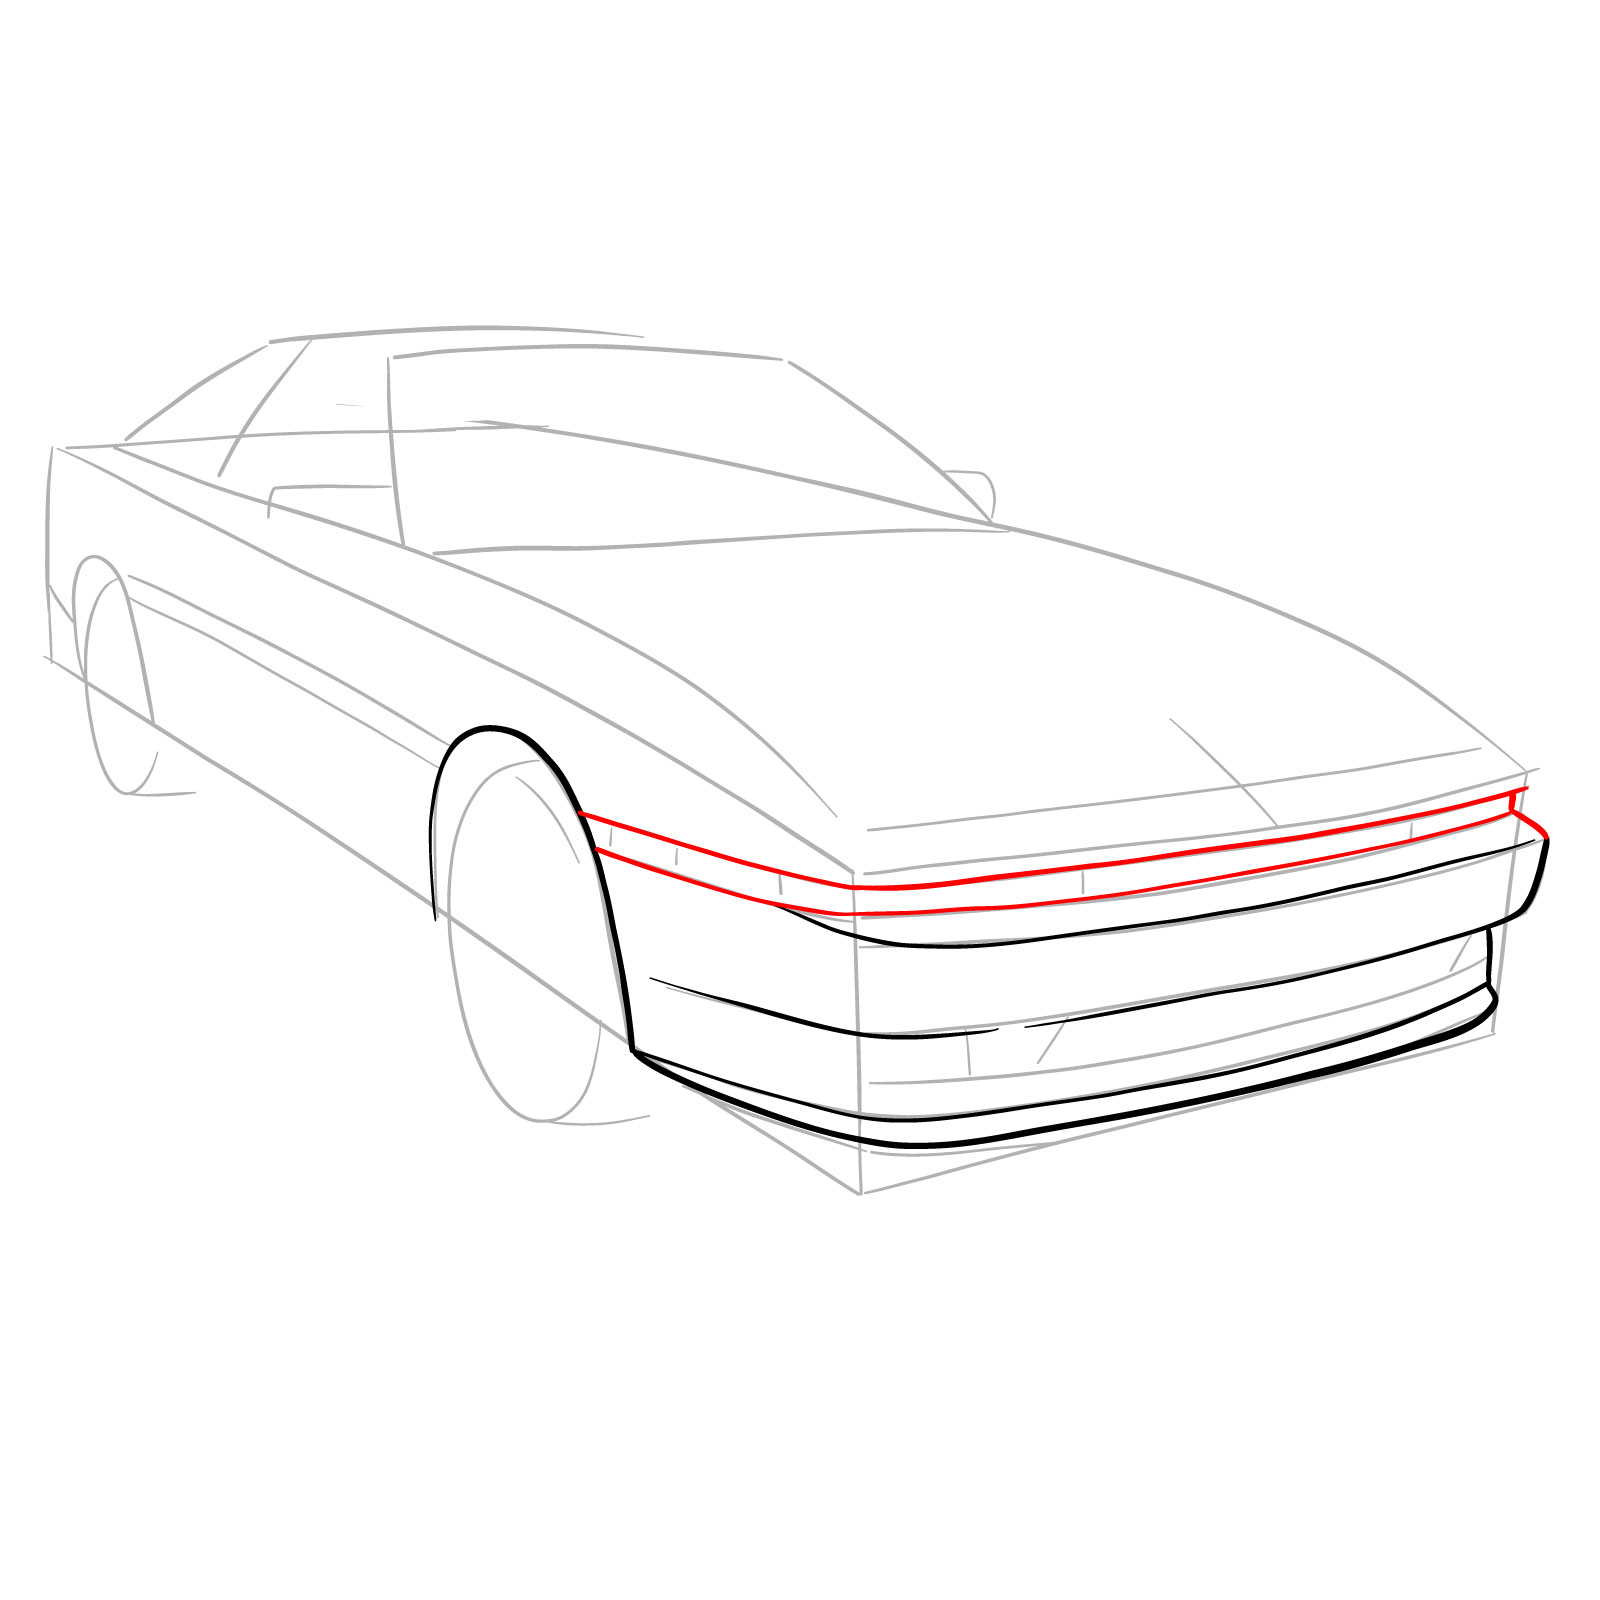 How to draw a 1988 Toyota Supra Turbo MK 3 - step 07